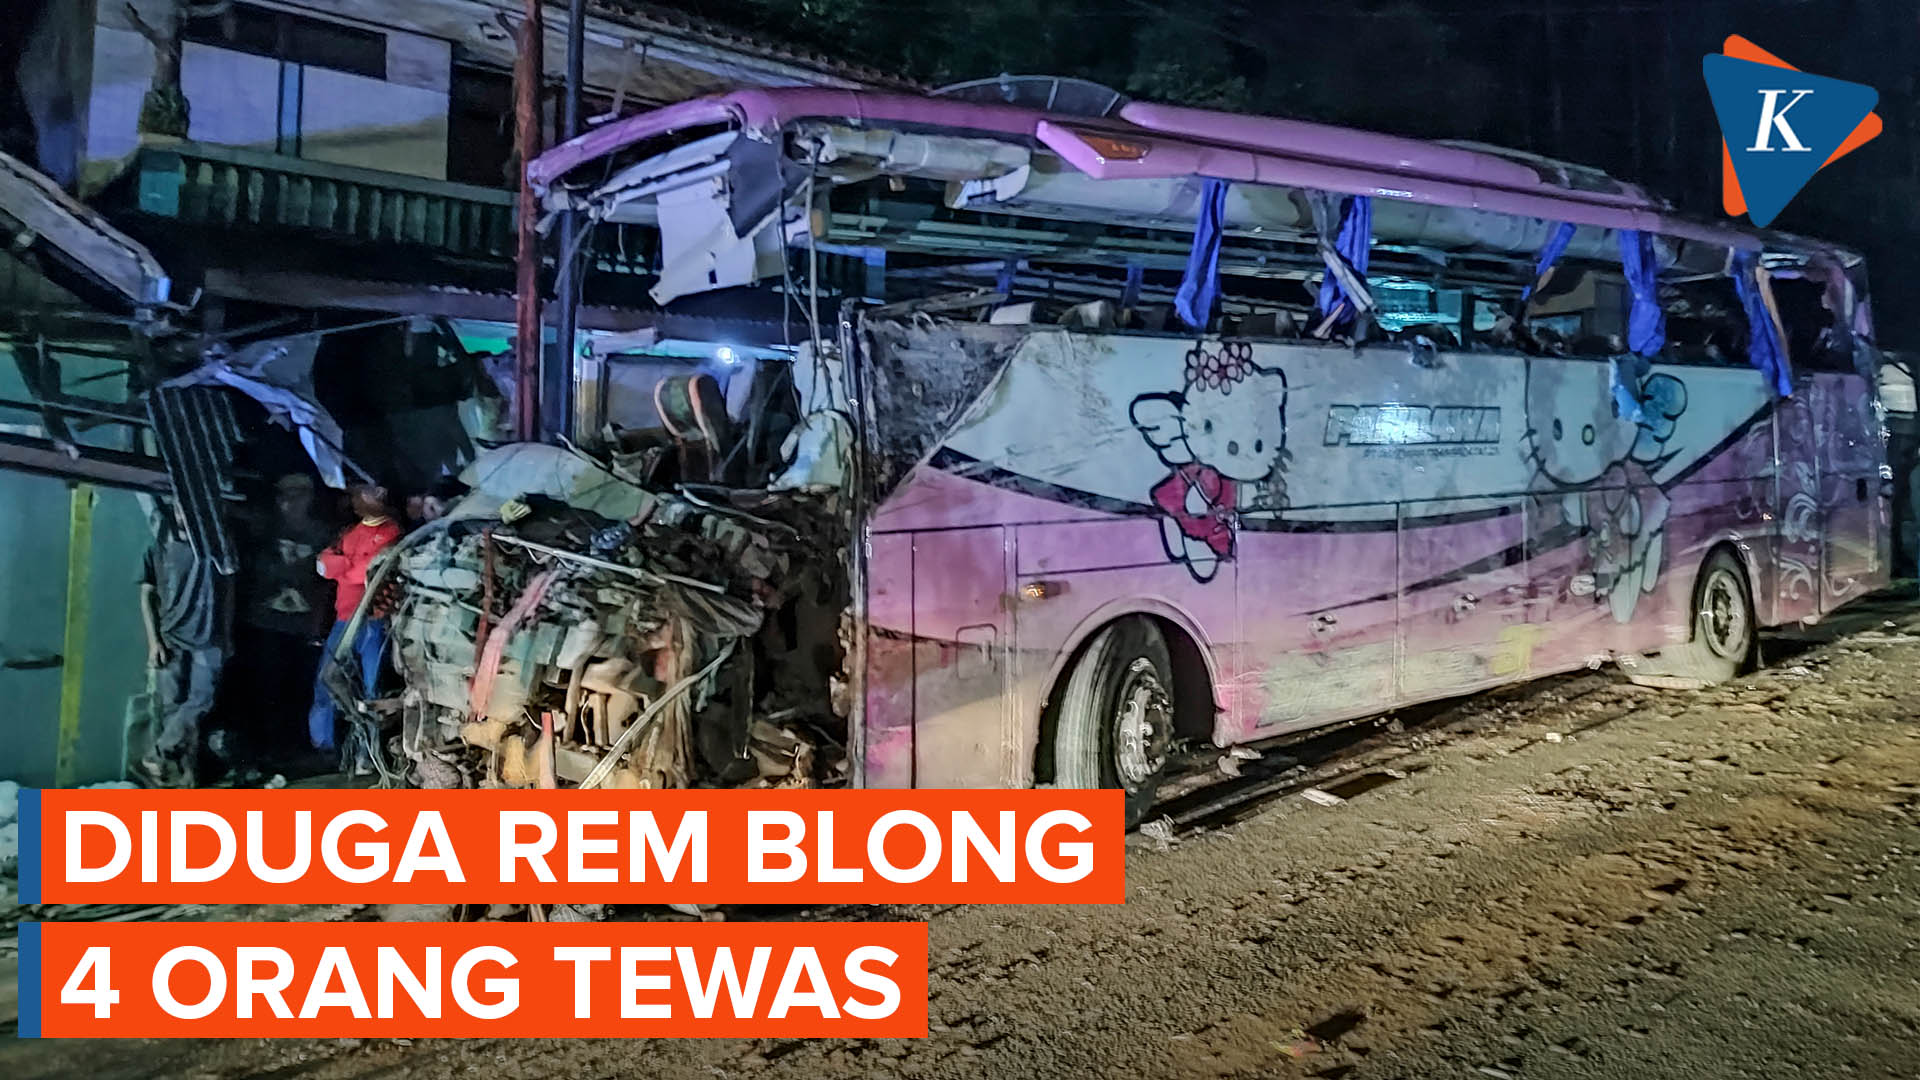 5 Fakta Kecelakaan Maut Bus Peziarah di Ciamis, Diduga Rem Blong